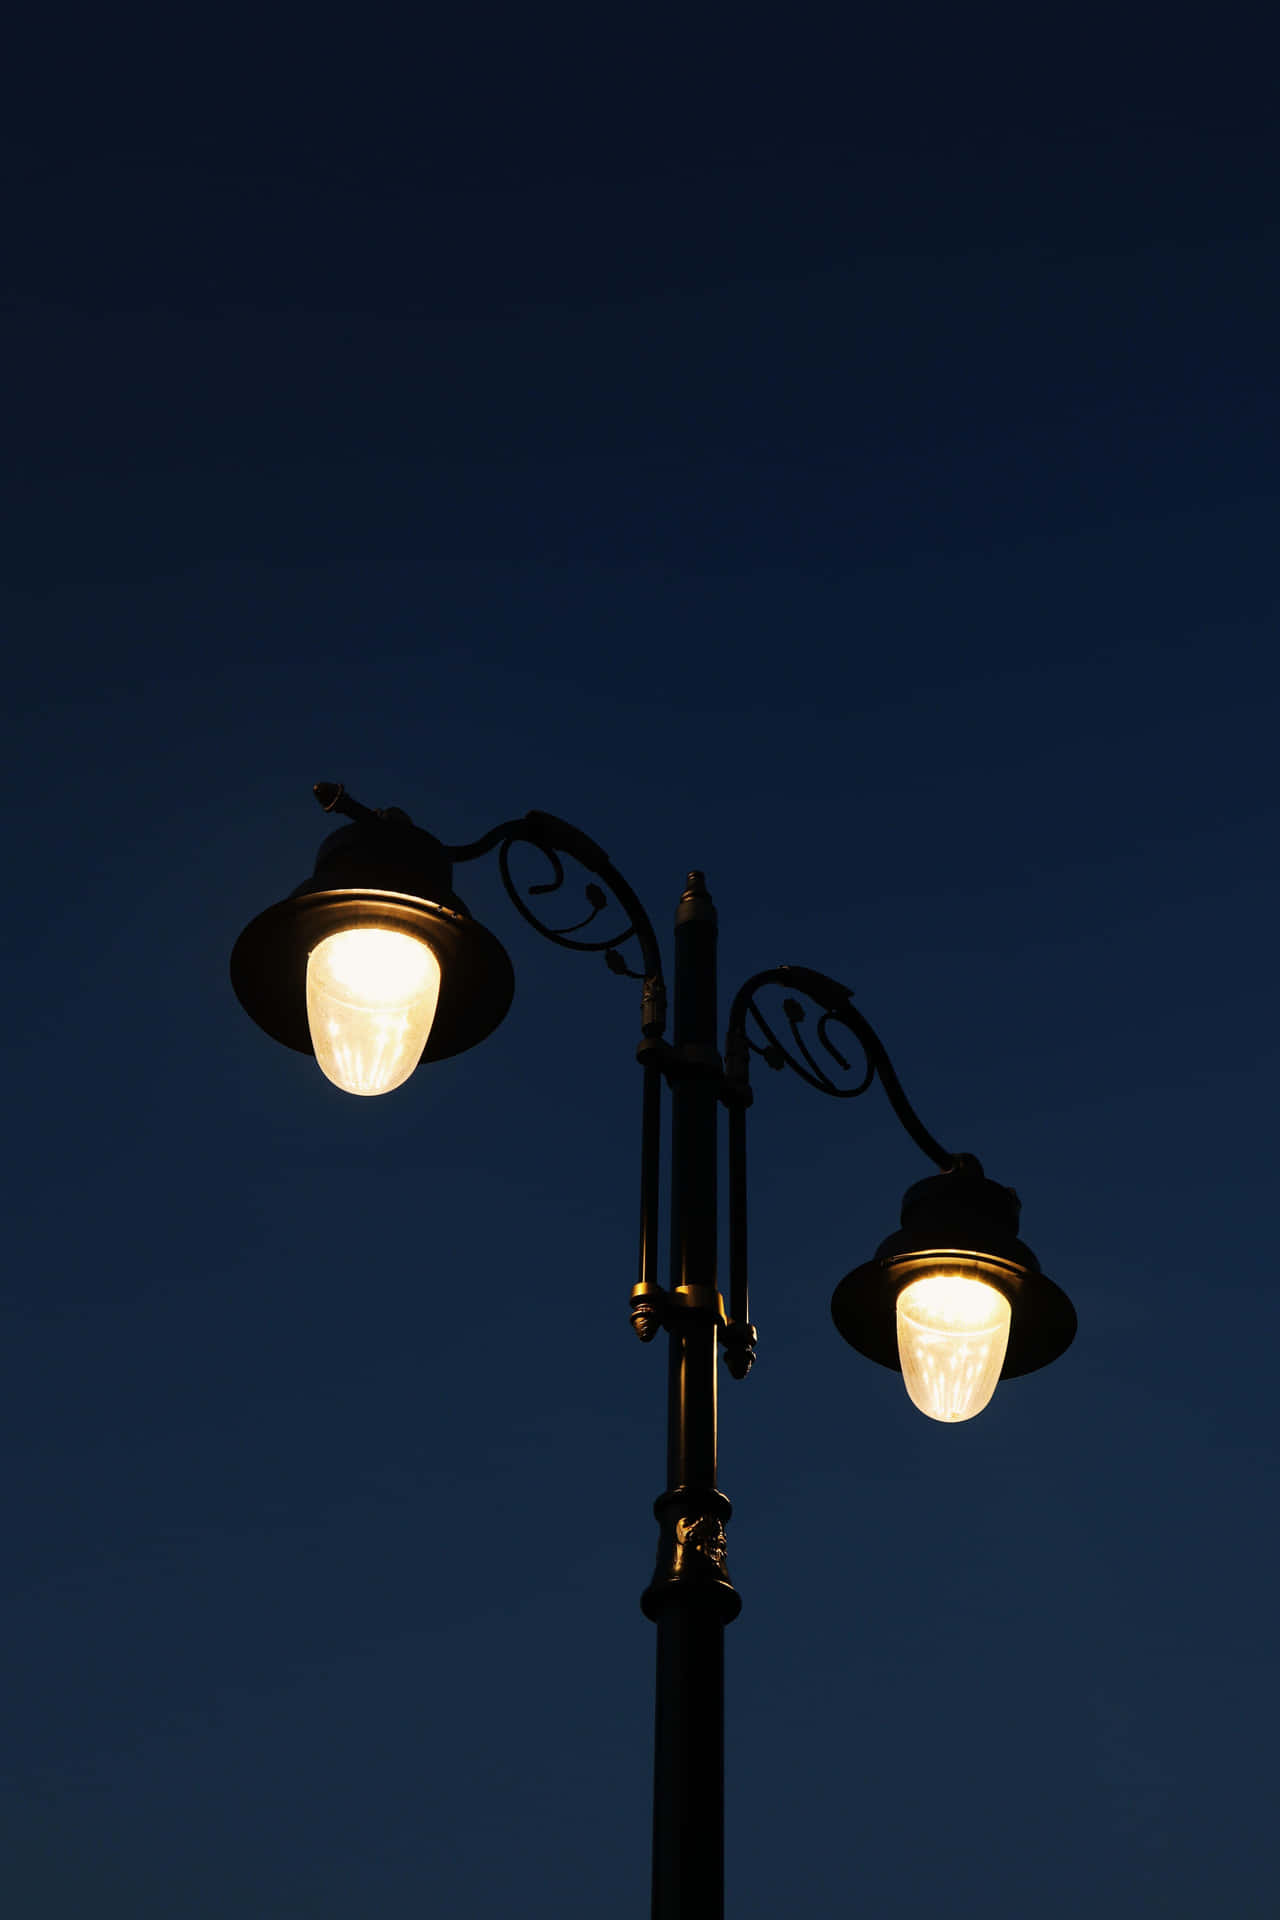 Twilight Street Lamps Wallpaper